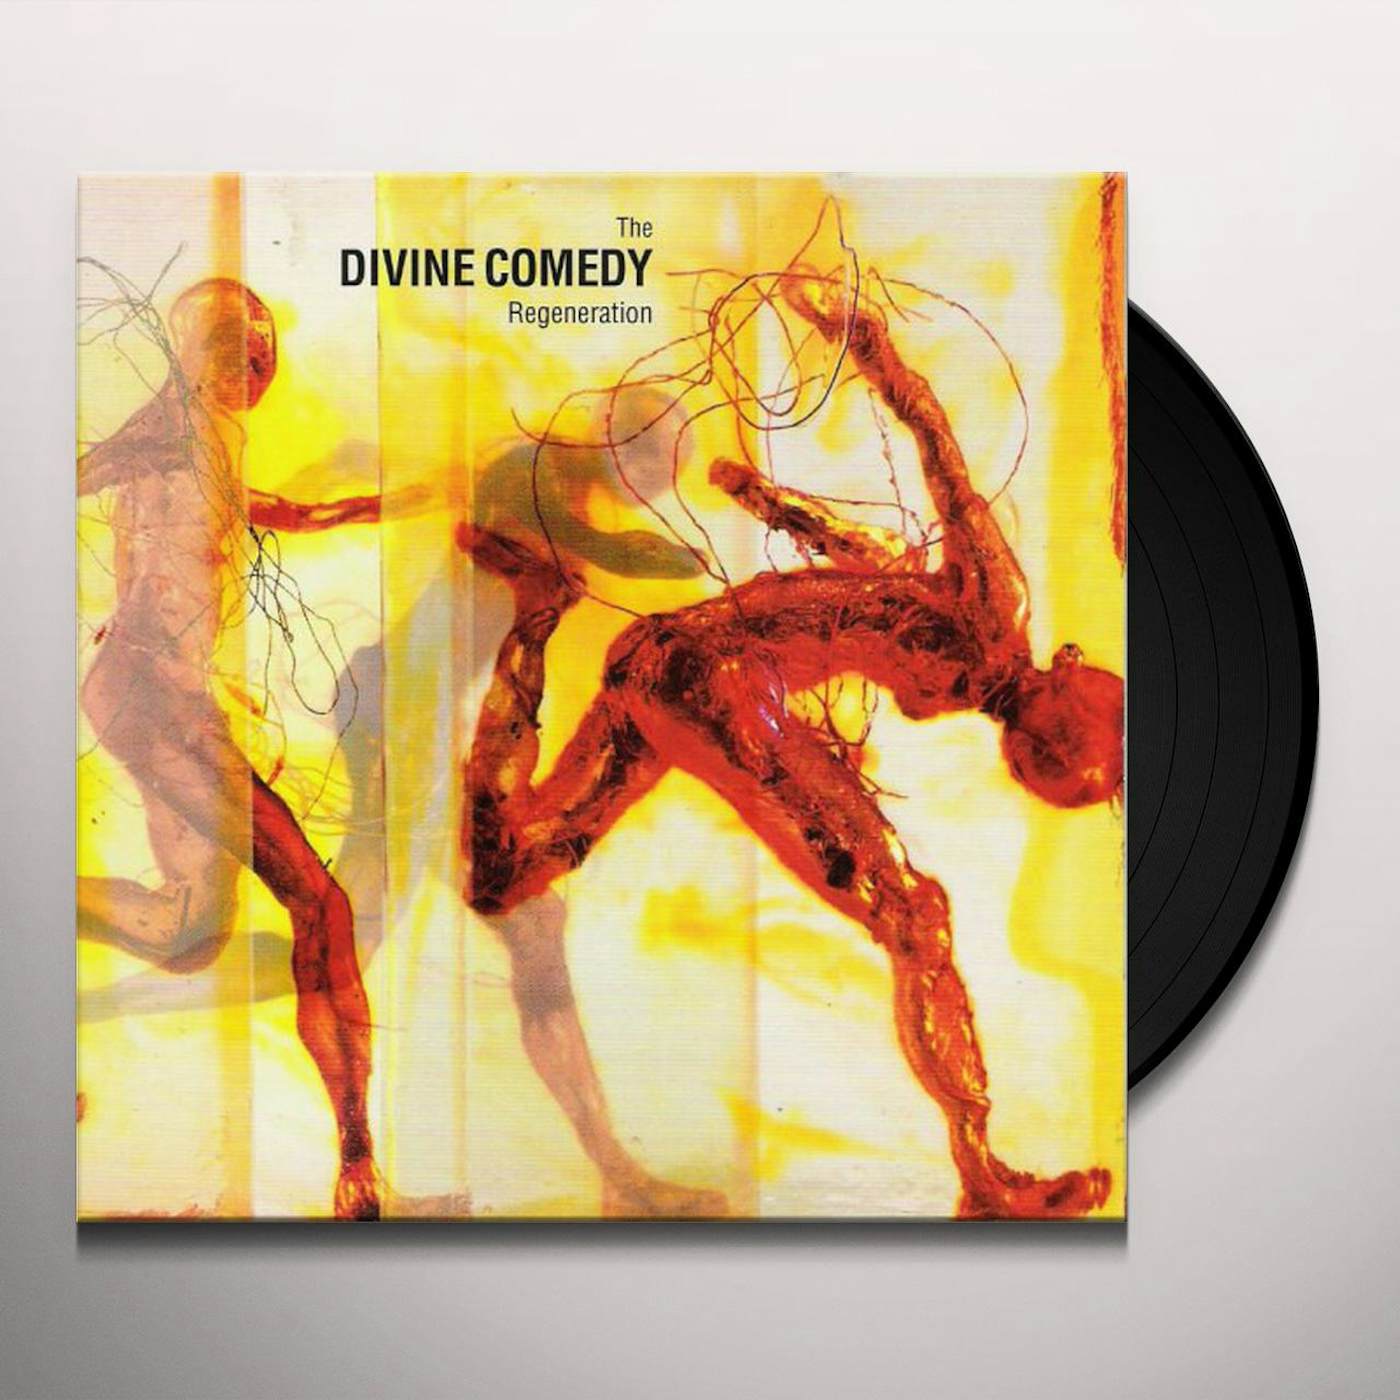 The Divine Comedy Regeneration Vinyl Record